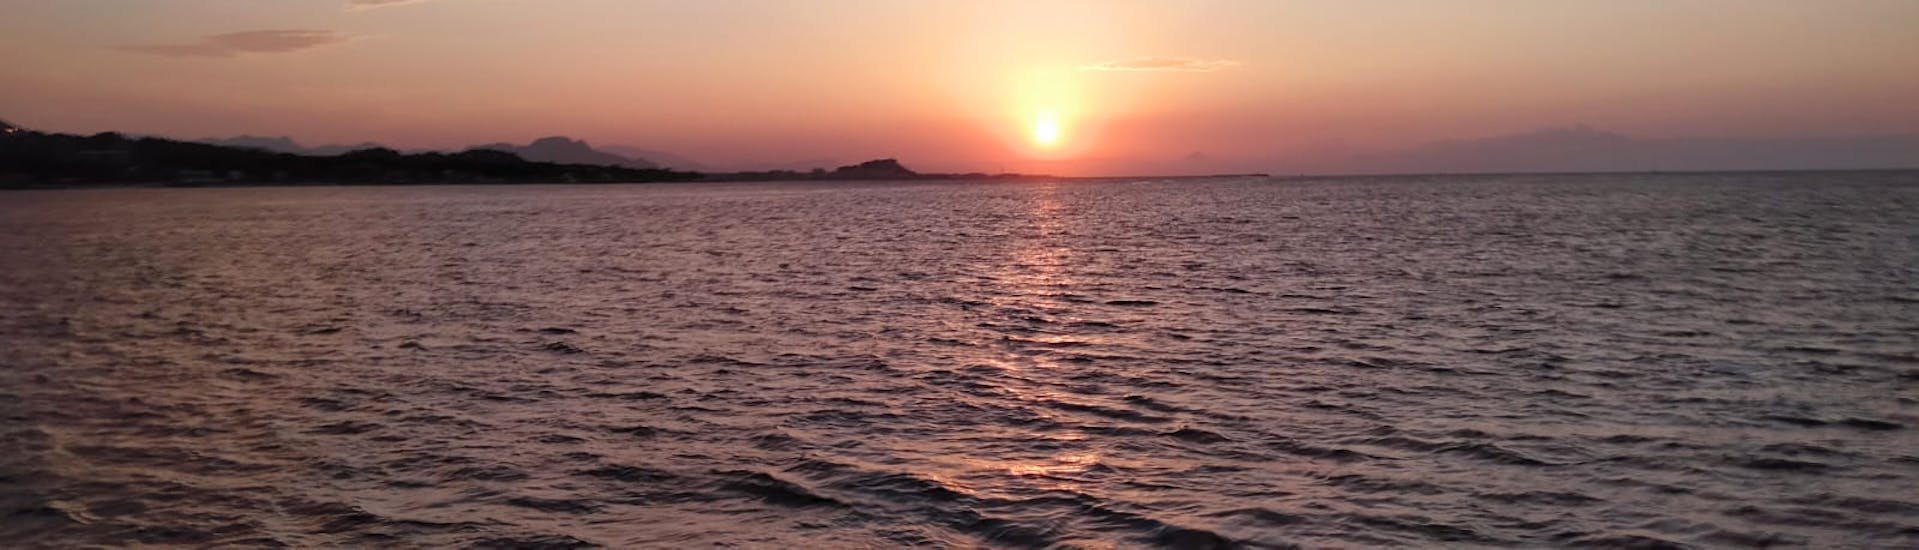 Catamarantocht bij zonsondergang naar Cova Tallada vanuit Denia en Jávea.